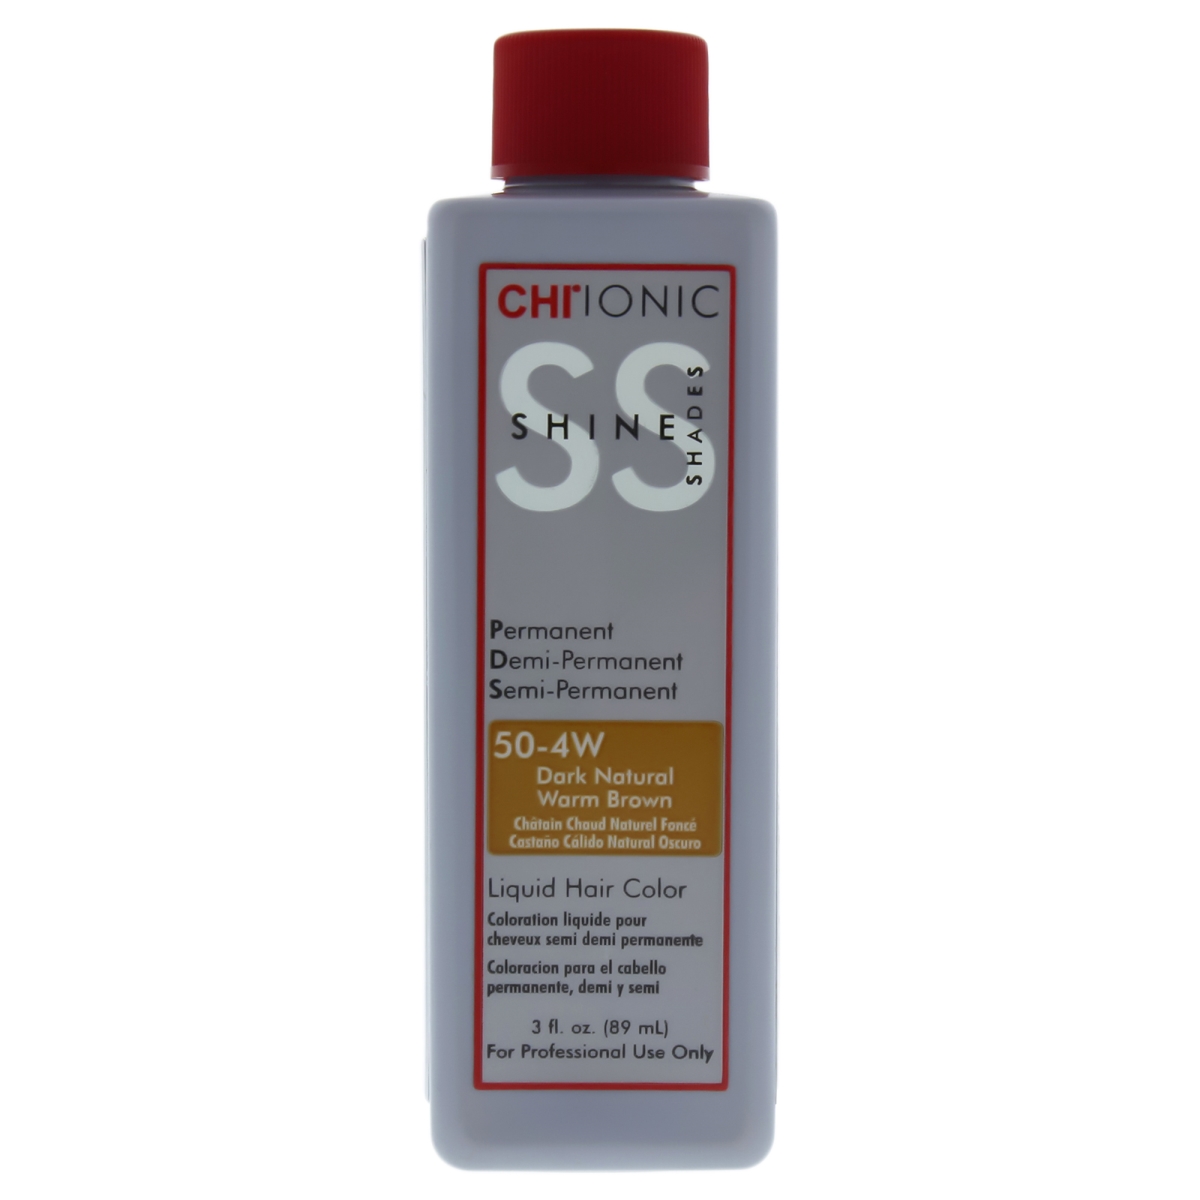 I0084018 Ionic Shine Shades Liquid Hair Color For Unisex - 50-4w Dark Natural Warm Brown - 3 Oz